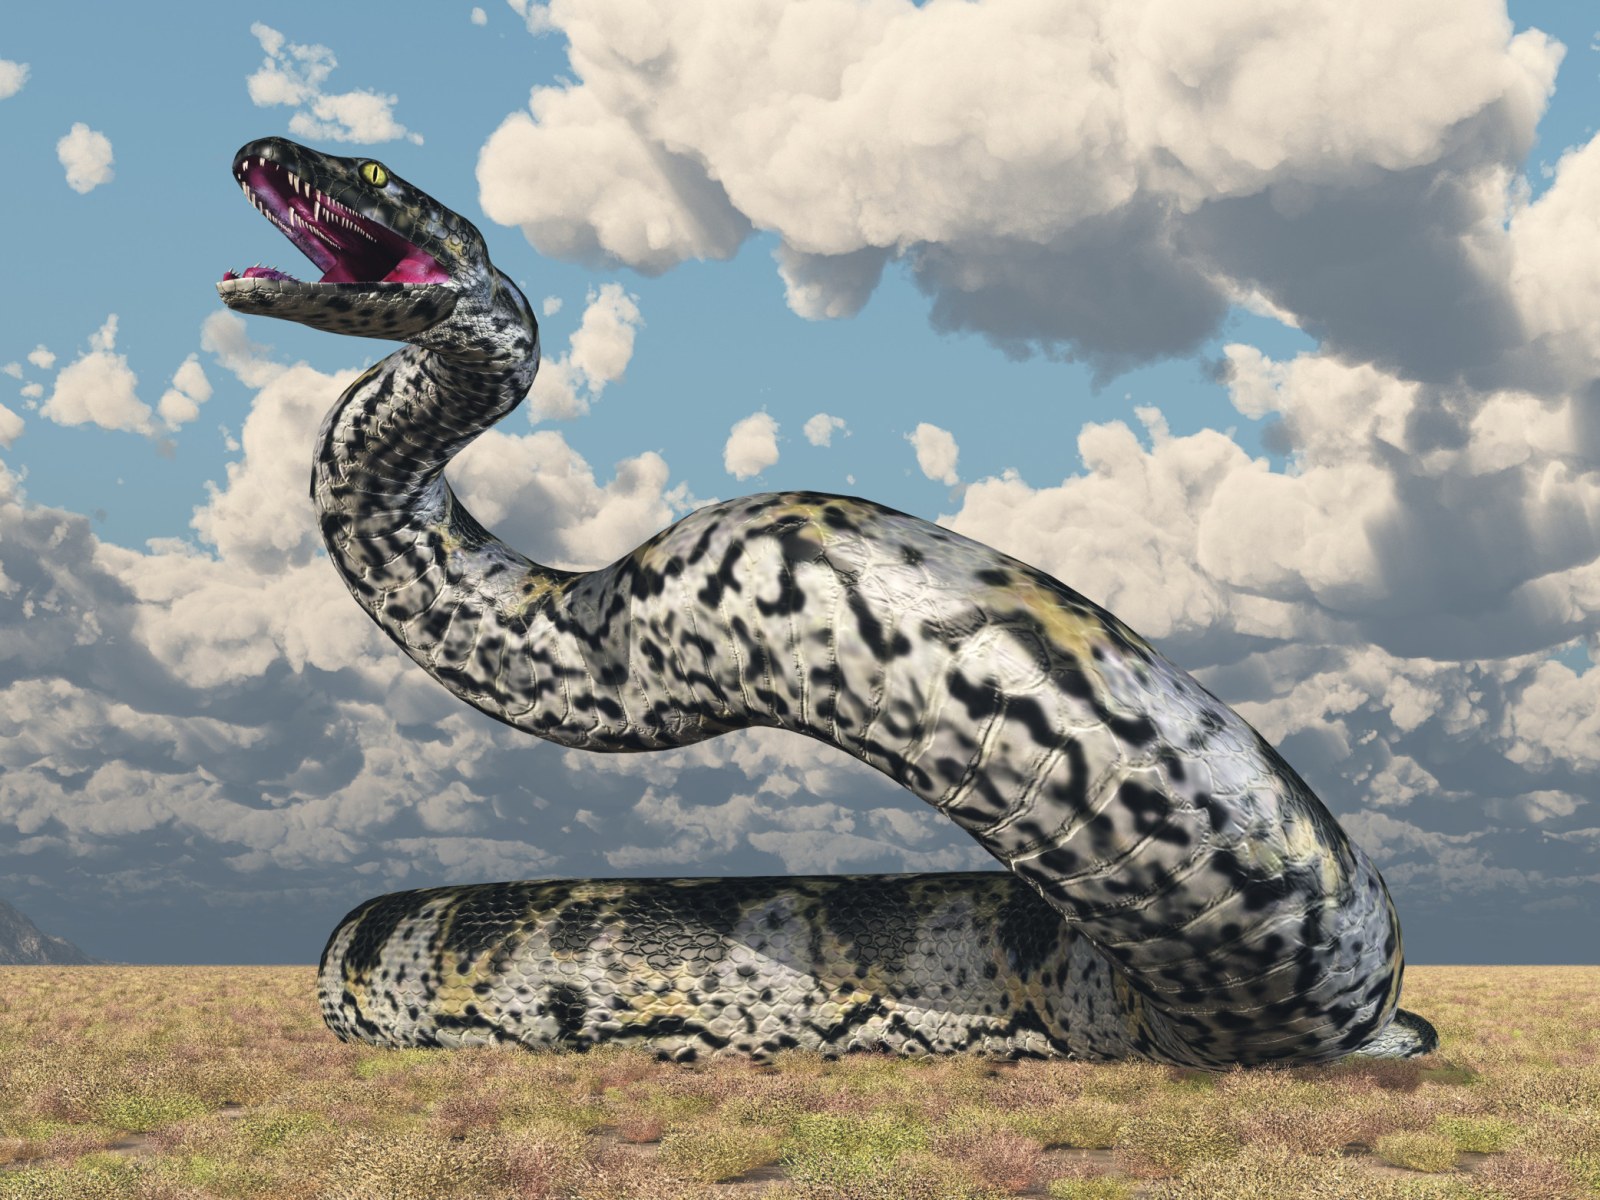 longest python found